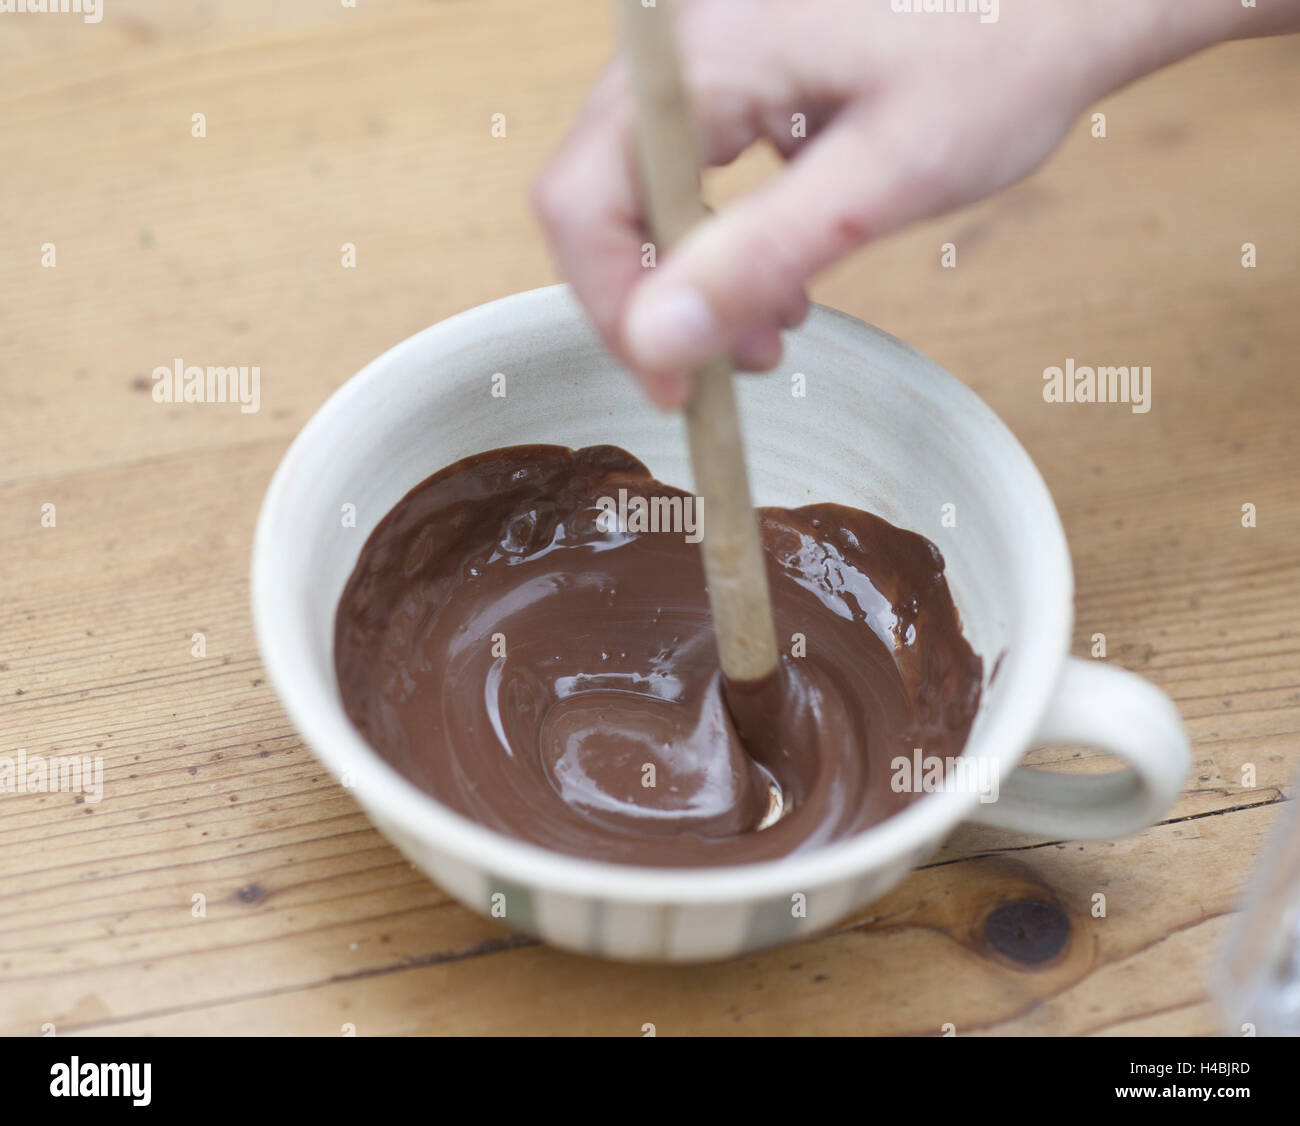 Woman stirs molten chocolate, medium close-up, Stock Photo